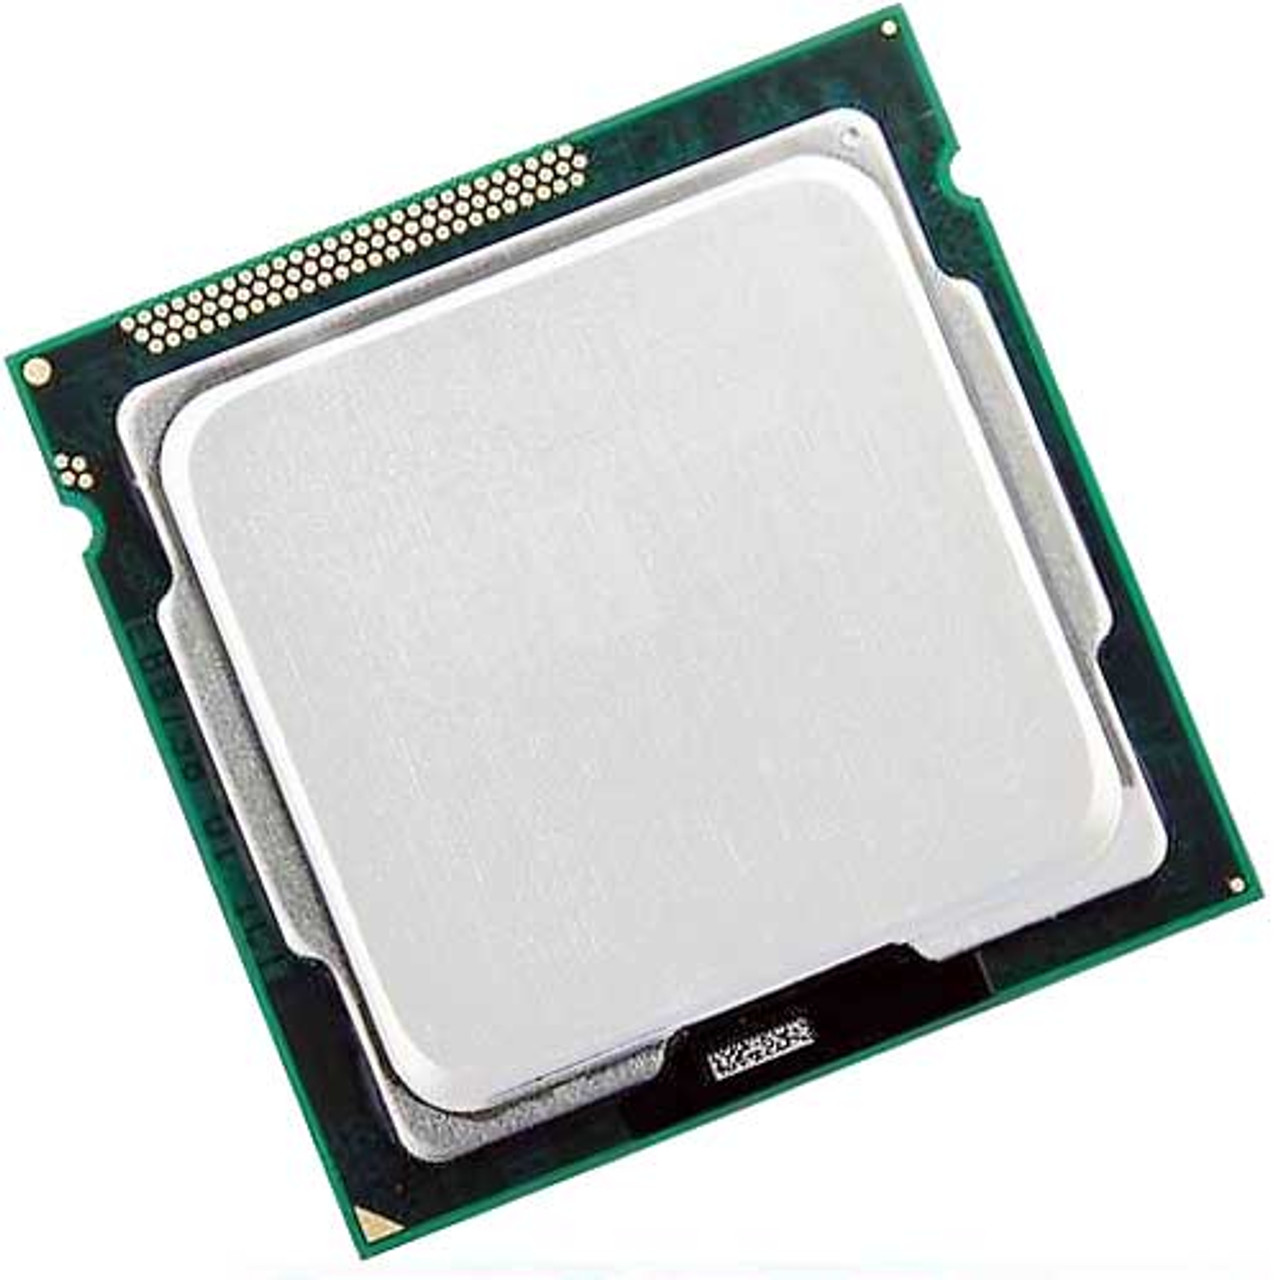 AMD Sempron 2800+ 1.6GHz Processor SDA2800BXBOX UPC 730143742801 - AMD